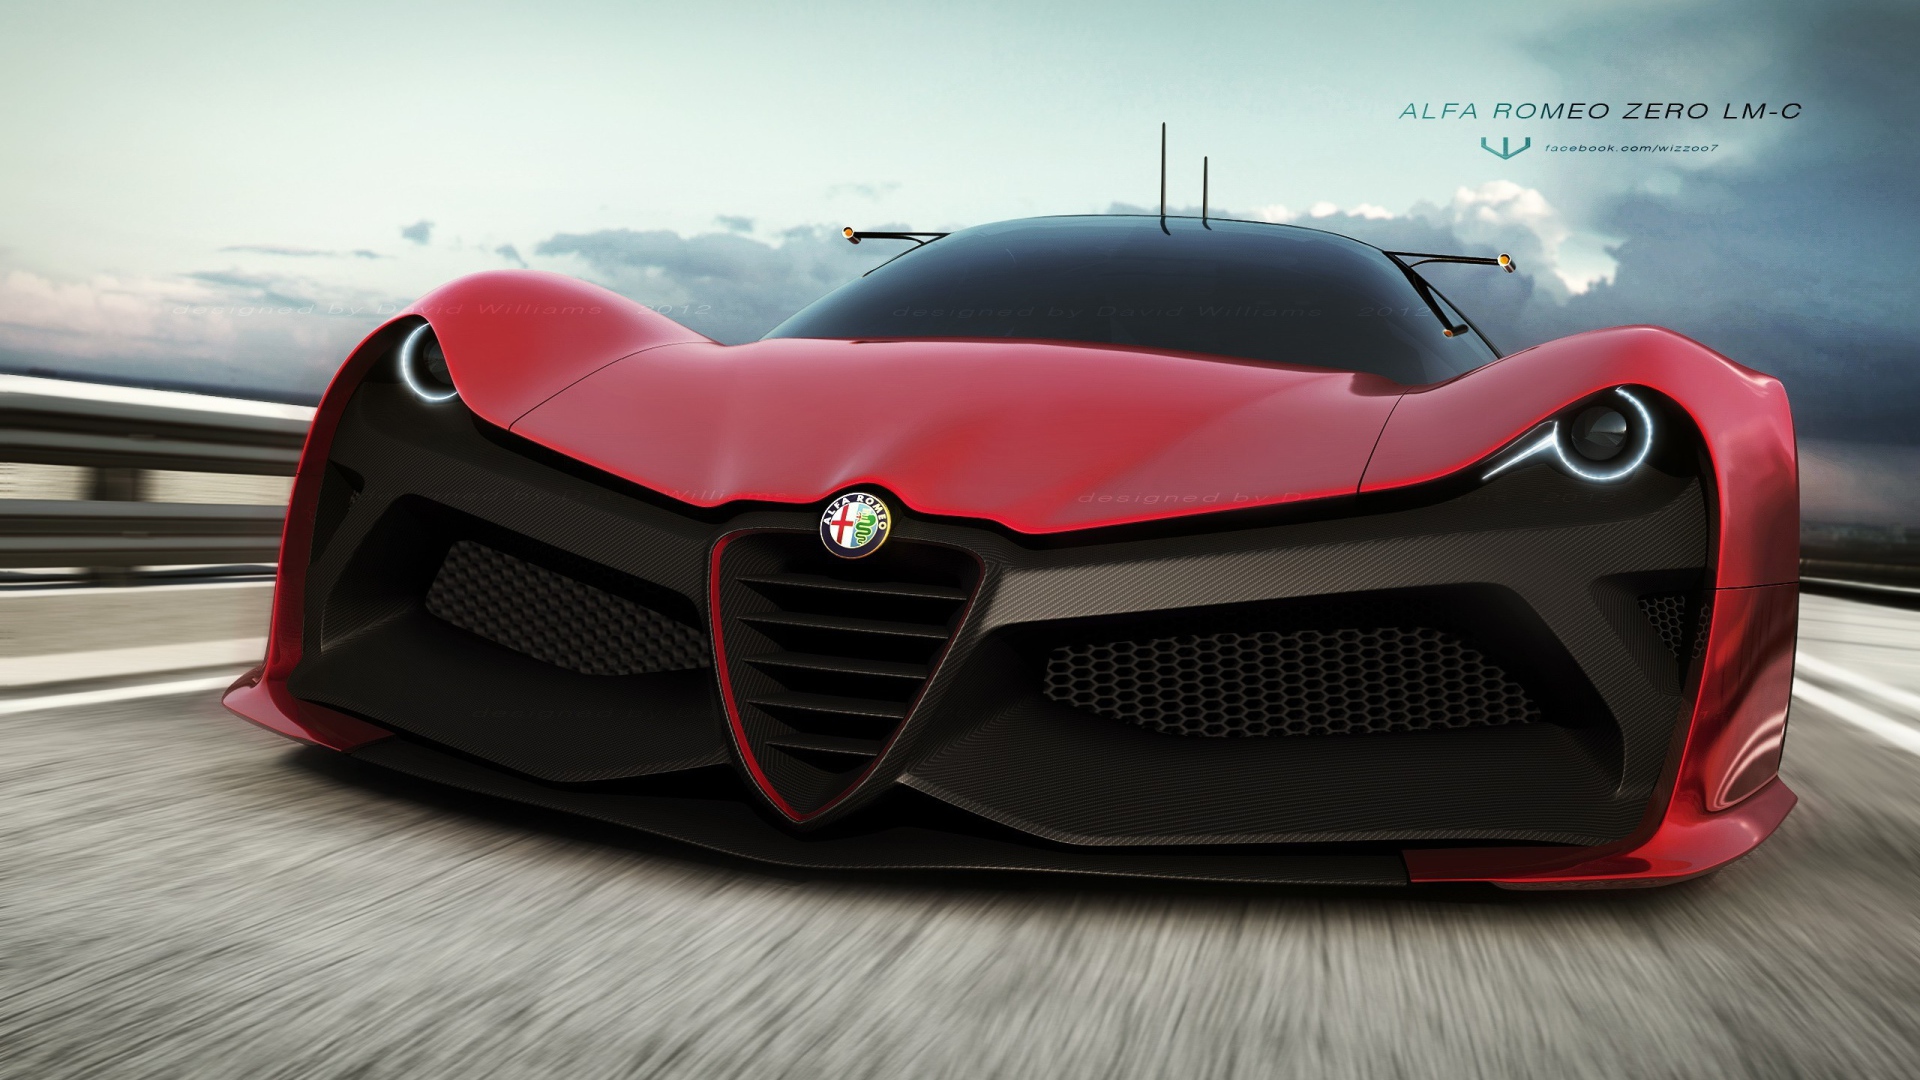 Красная Alfa Romeo Zero LM-C